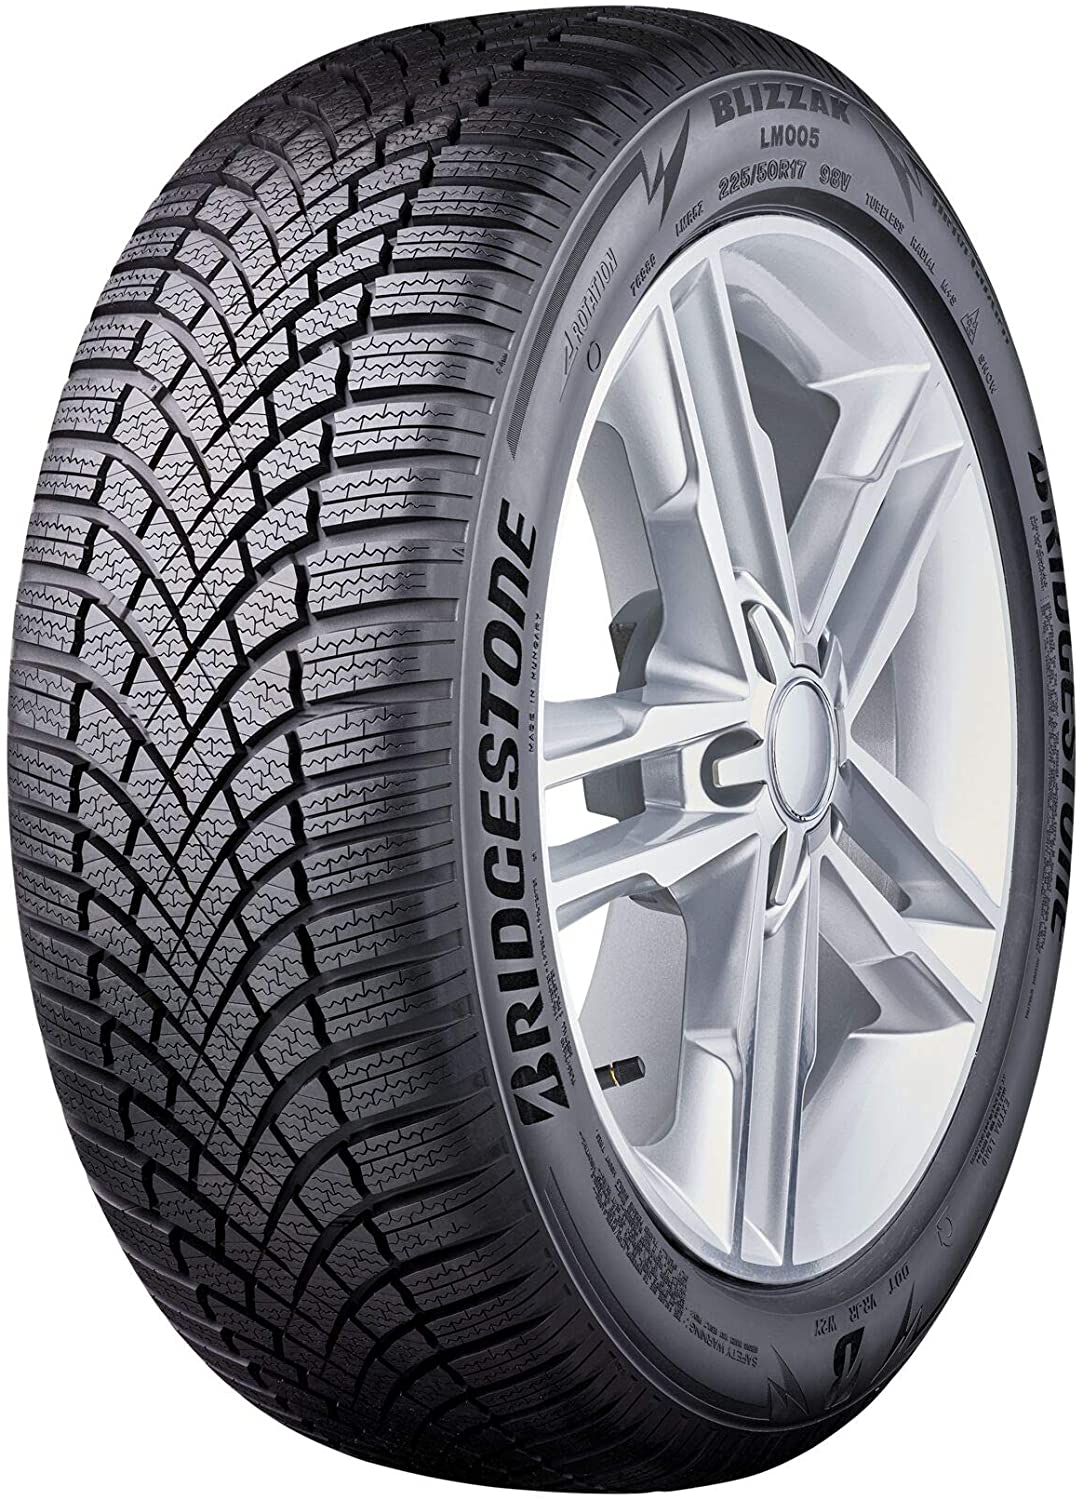 Gomme Nuove Bridgestone 155/65 R14 79T BLIZZAK LM005 XL M+S pneumatici nuovi Invernale